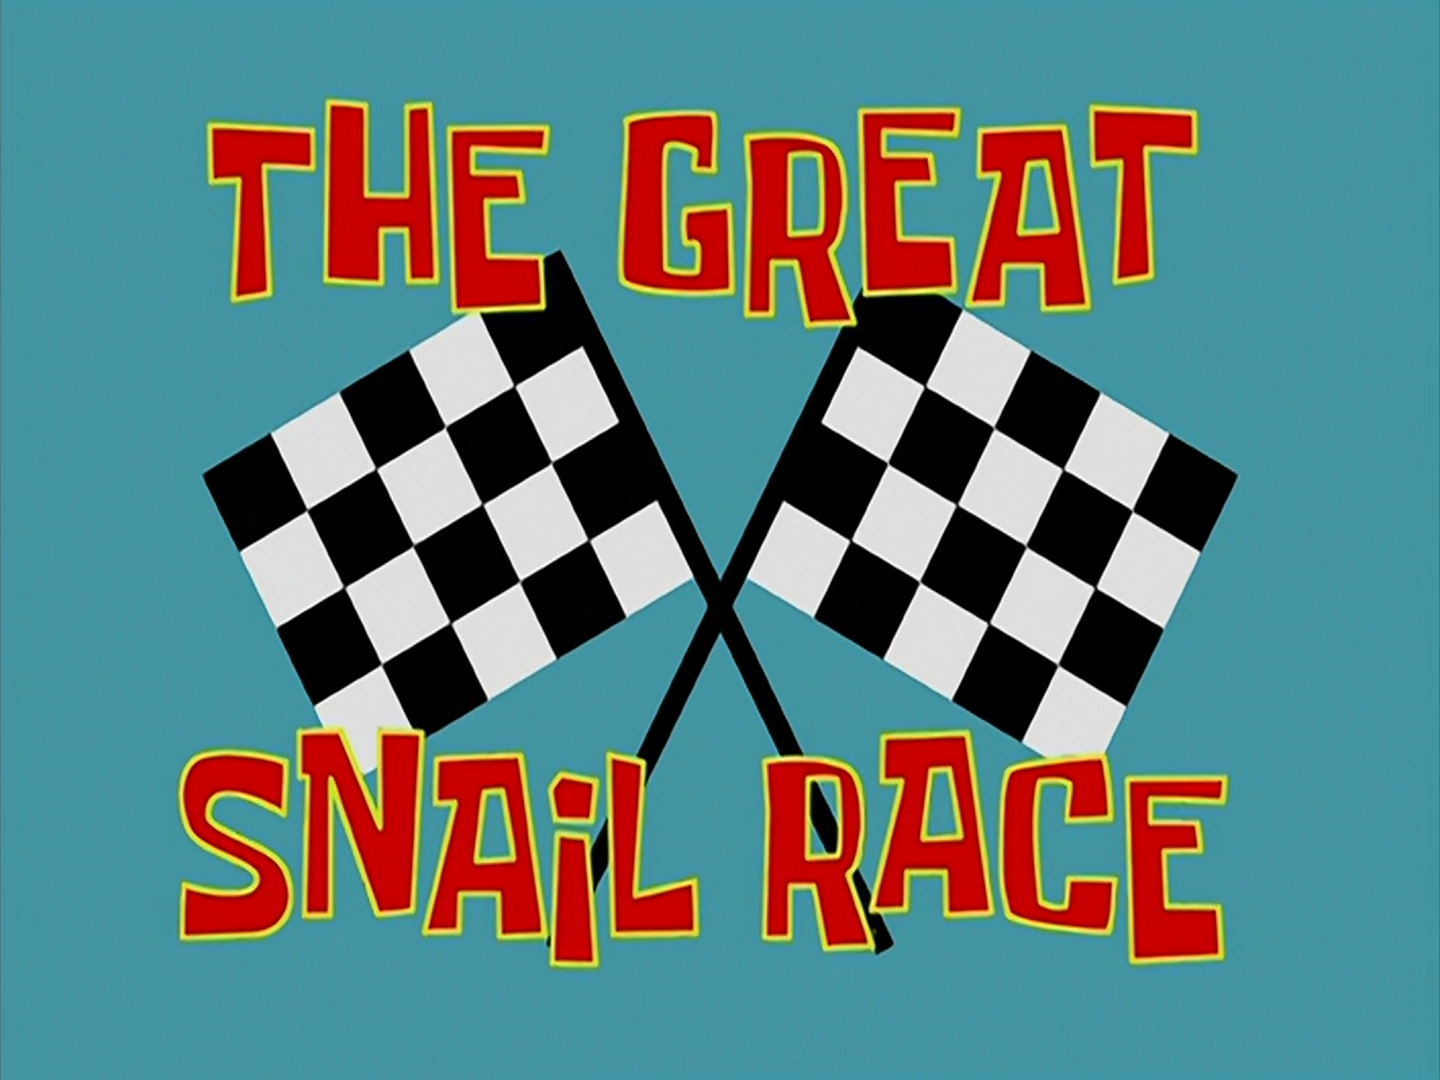 Snail Race Codes